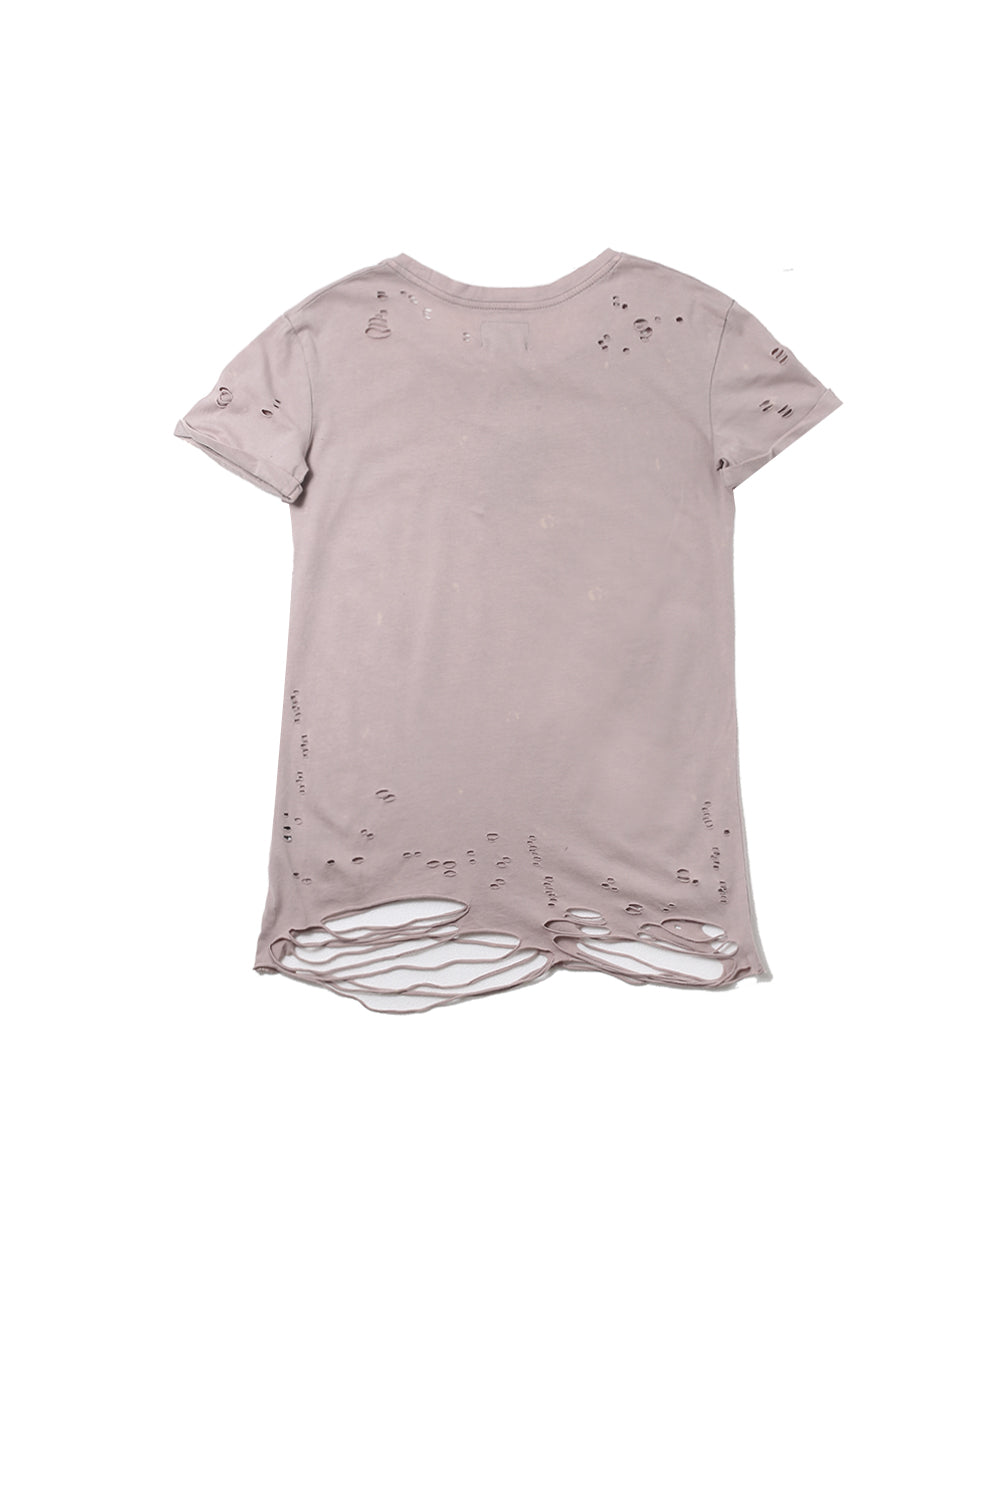 Sixth June - T-shirt destroy Femme rose W2370VTS